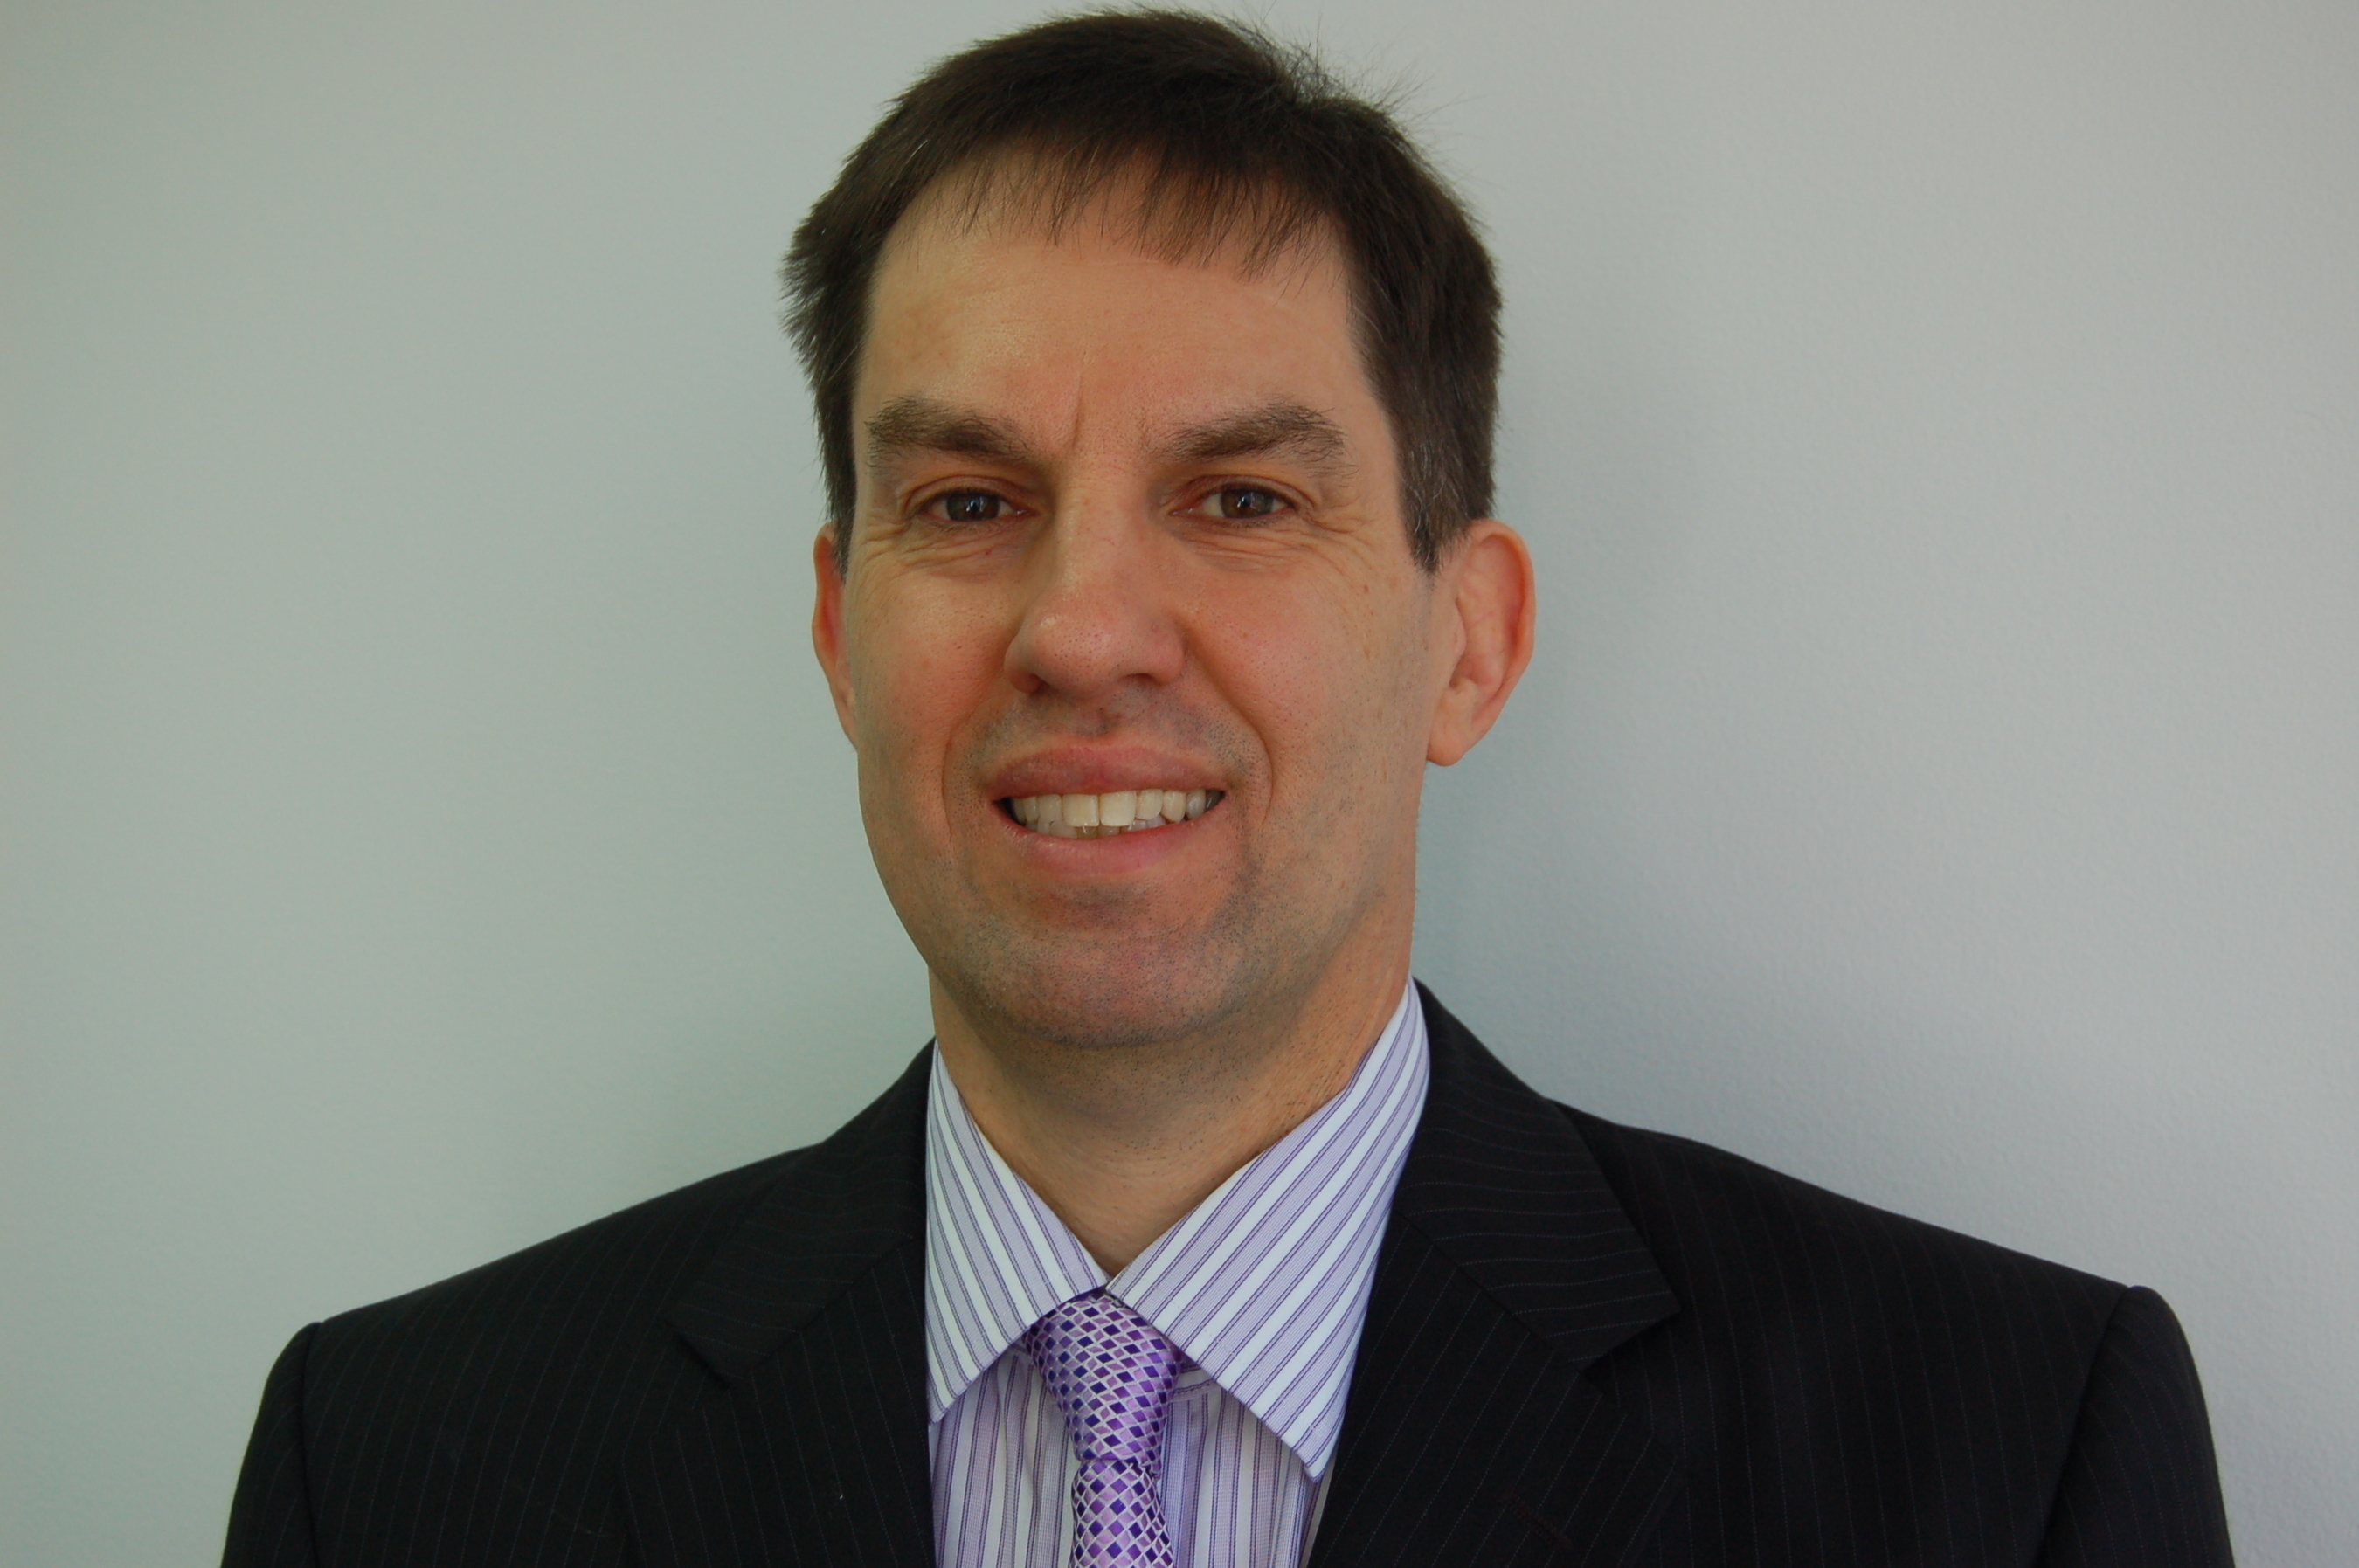 Phil Harpur, Senior Research Manager, Australia & New Zealand ICT Practice, Frost & Sullivan